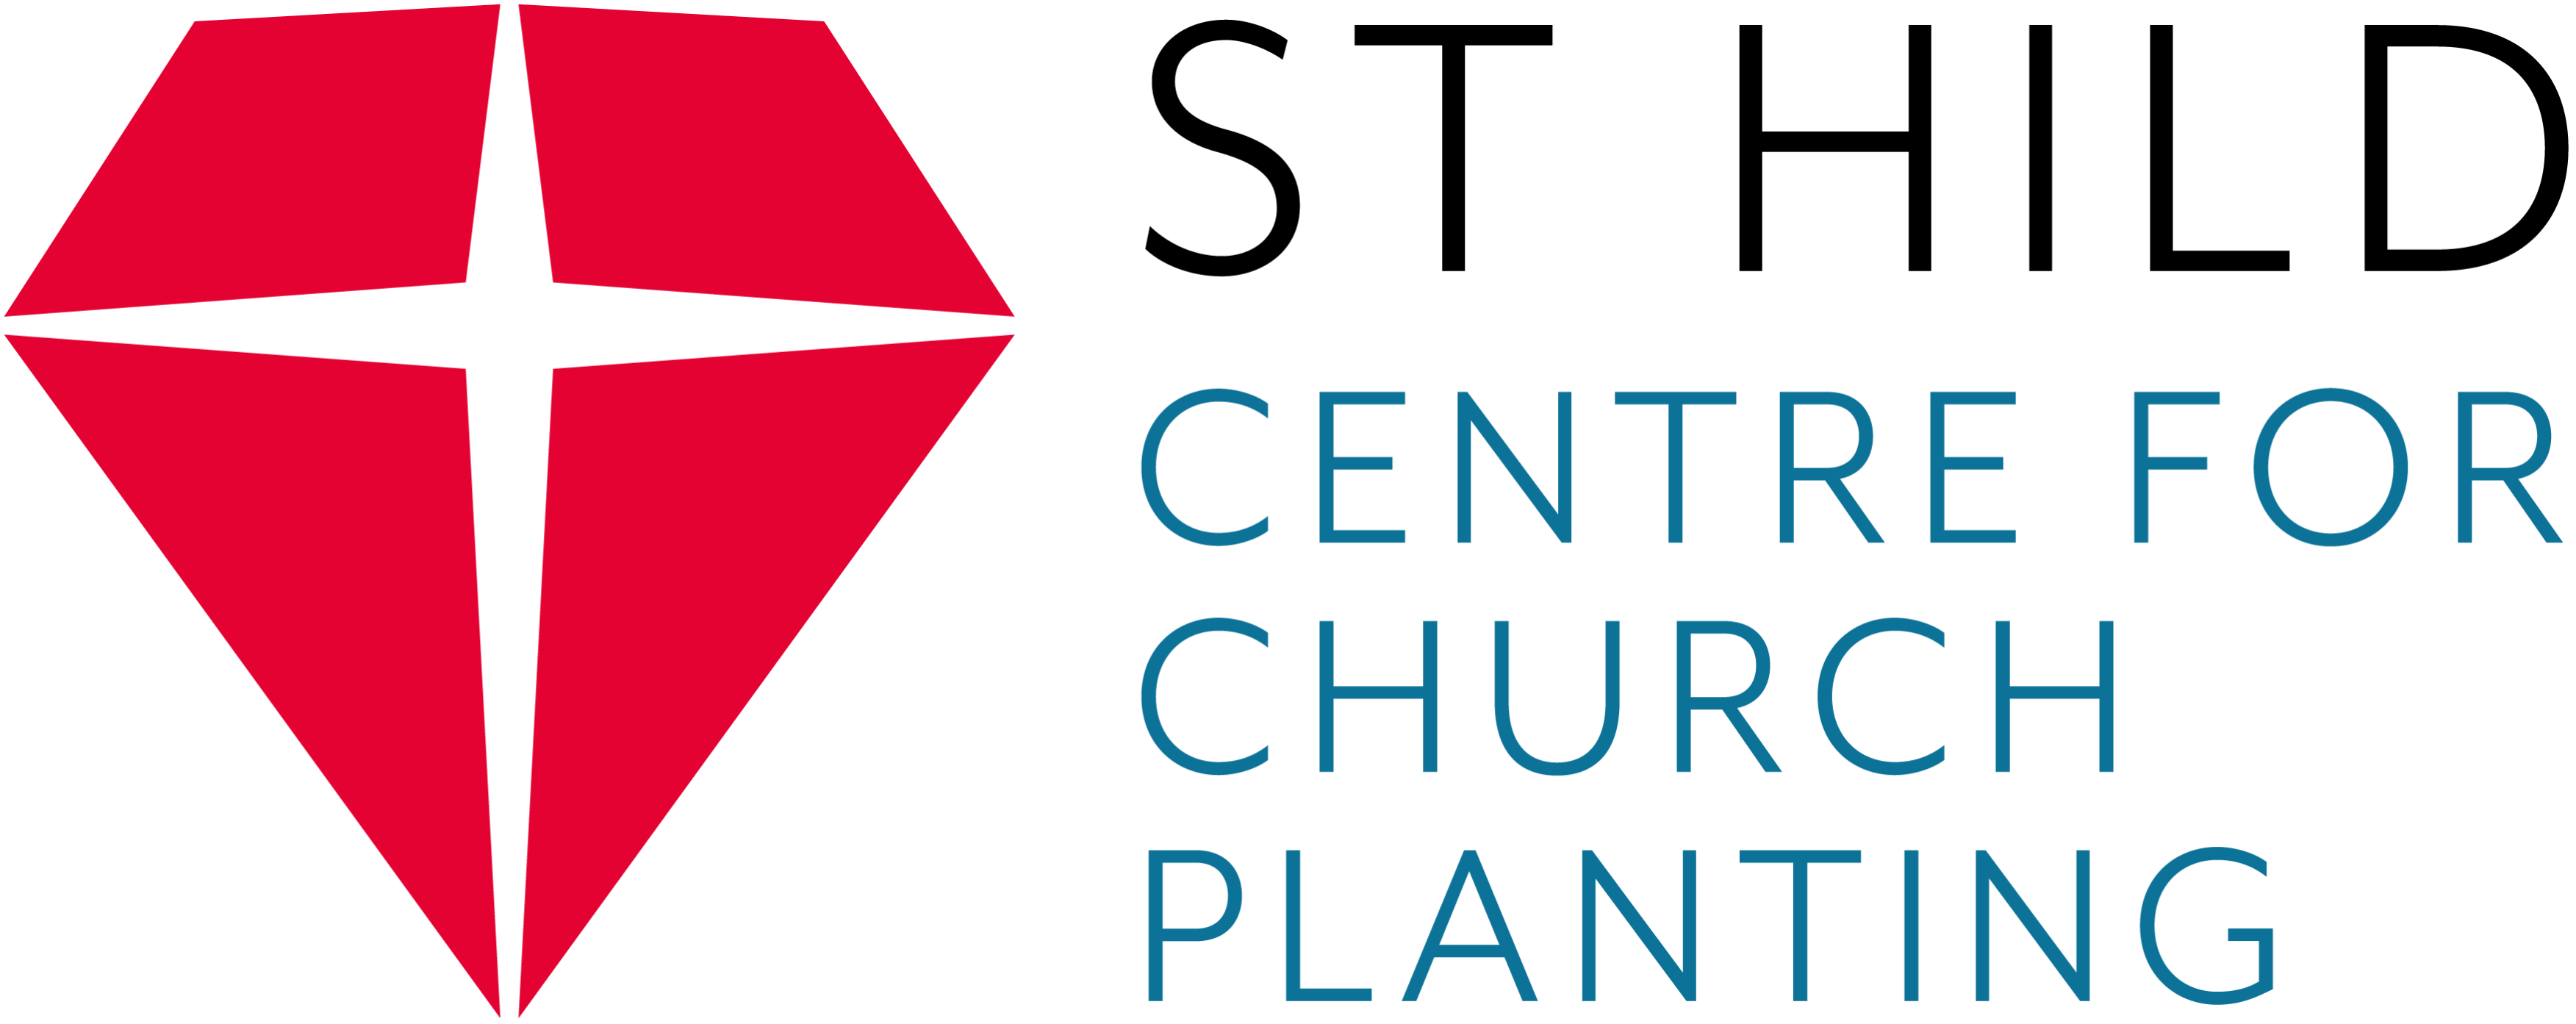 St Hild Centre for Church Planting